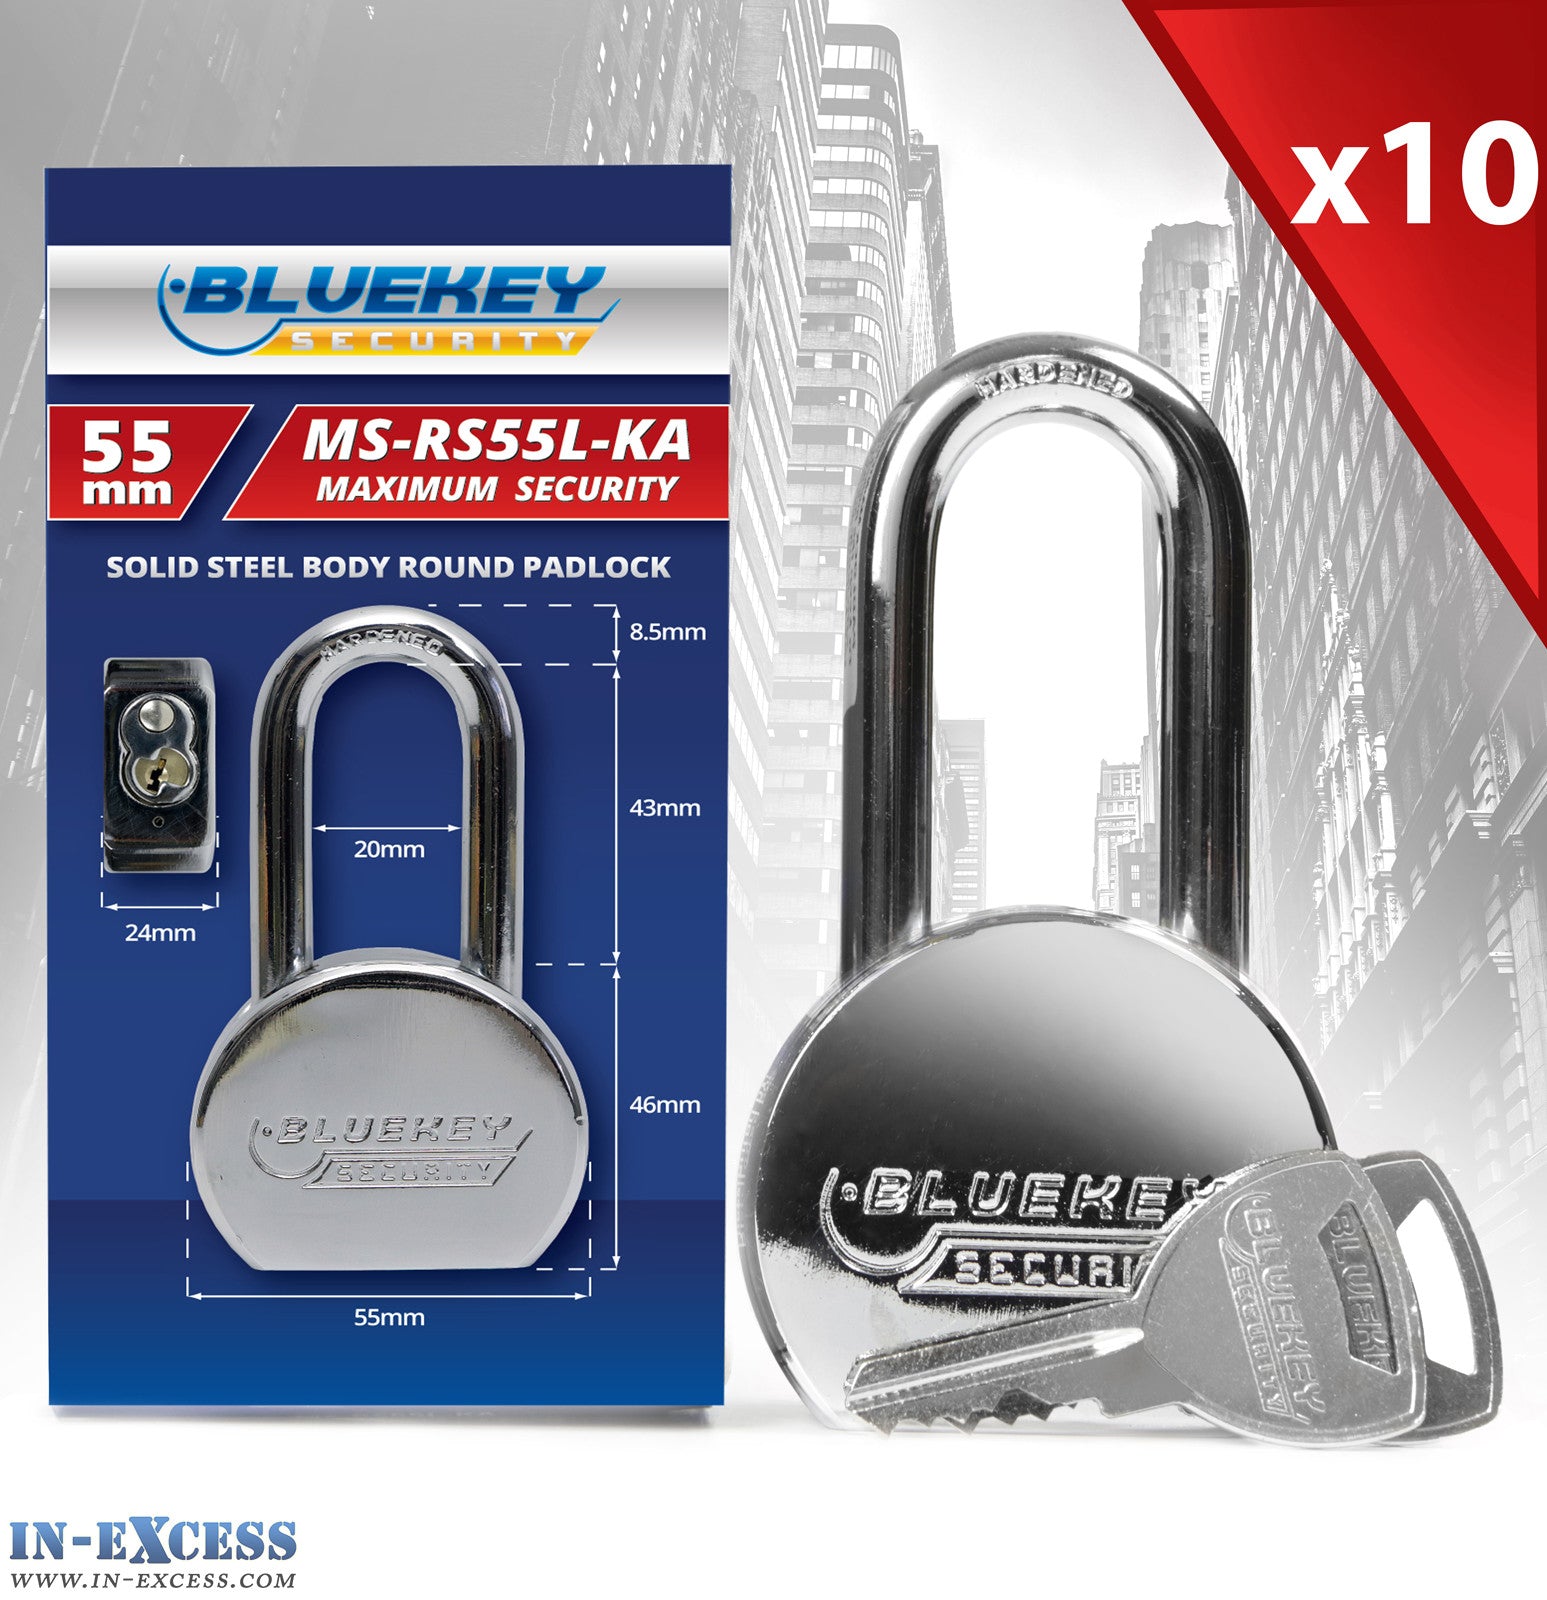 10x Bluekey Maximum Security Solid Steel Body Round Keyed Alike 55mm Padlocks MS-RS55L-KA